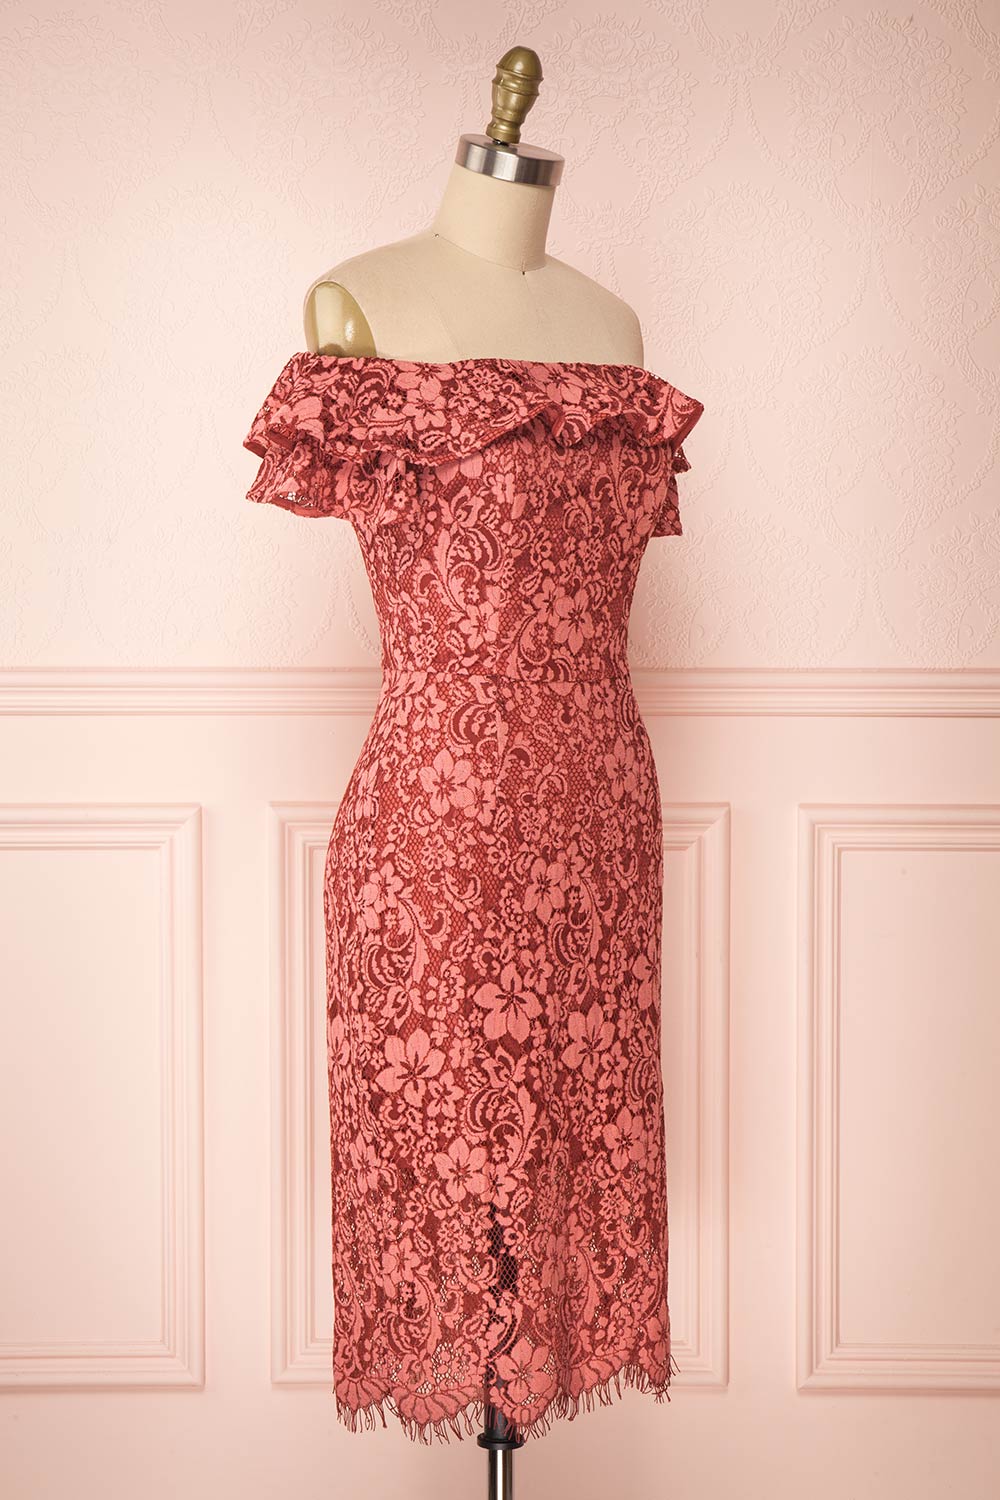 Gwendoline Pink Lace Off-Shoulder Short Fitted Dress | Boutique 1861 side view 